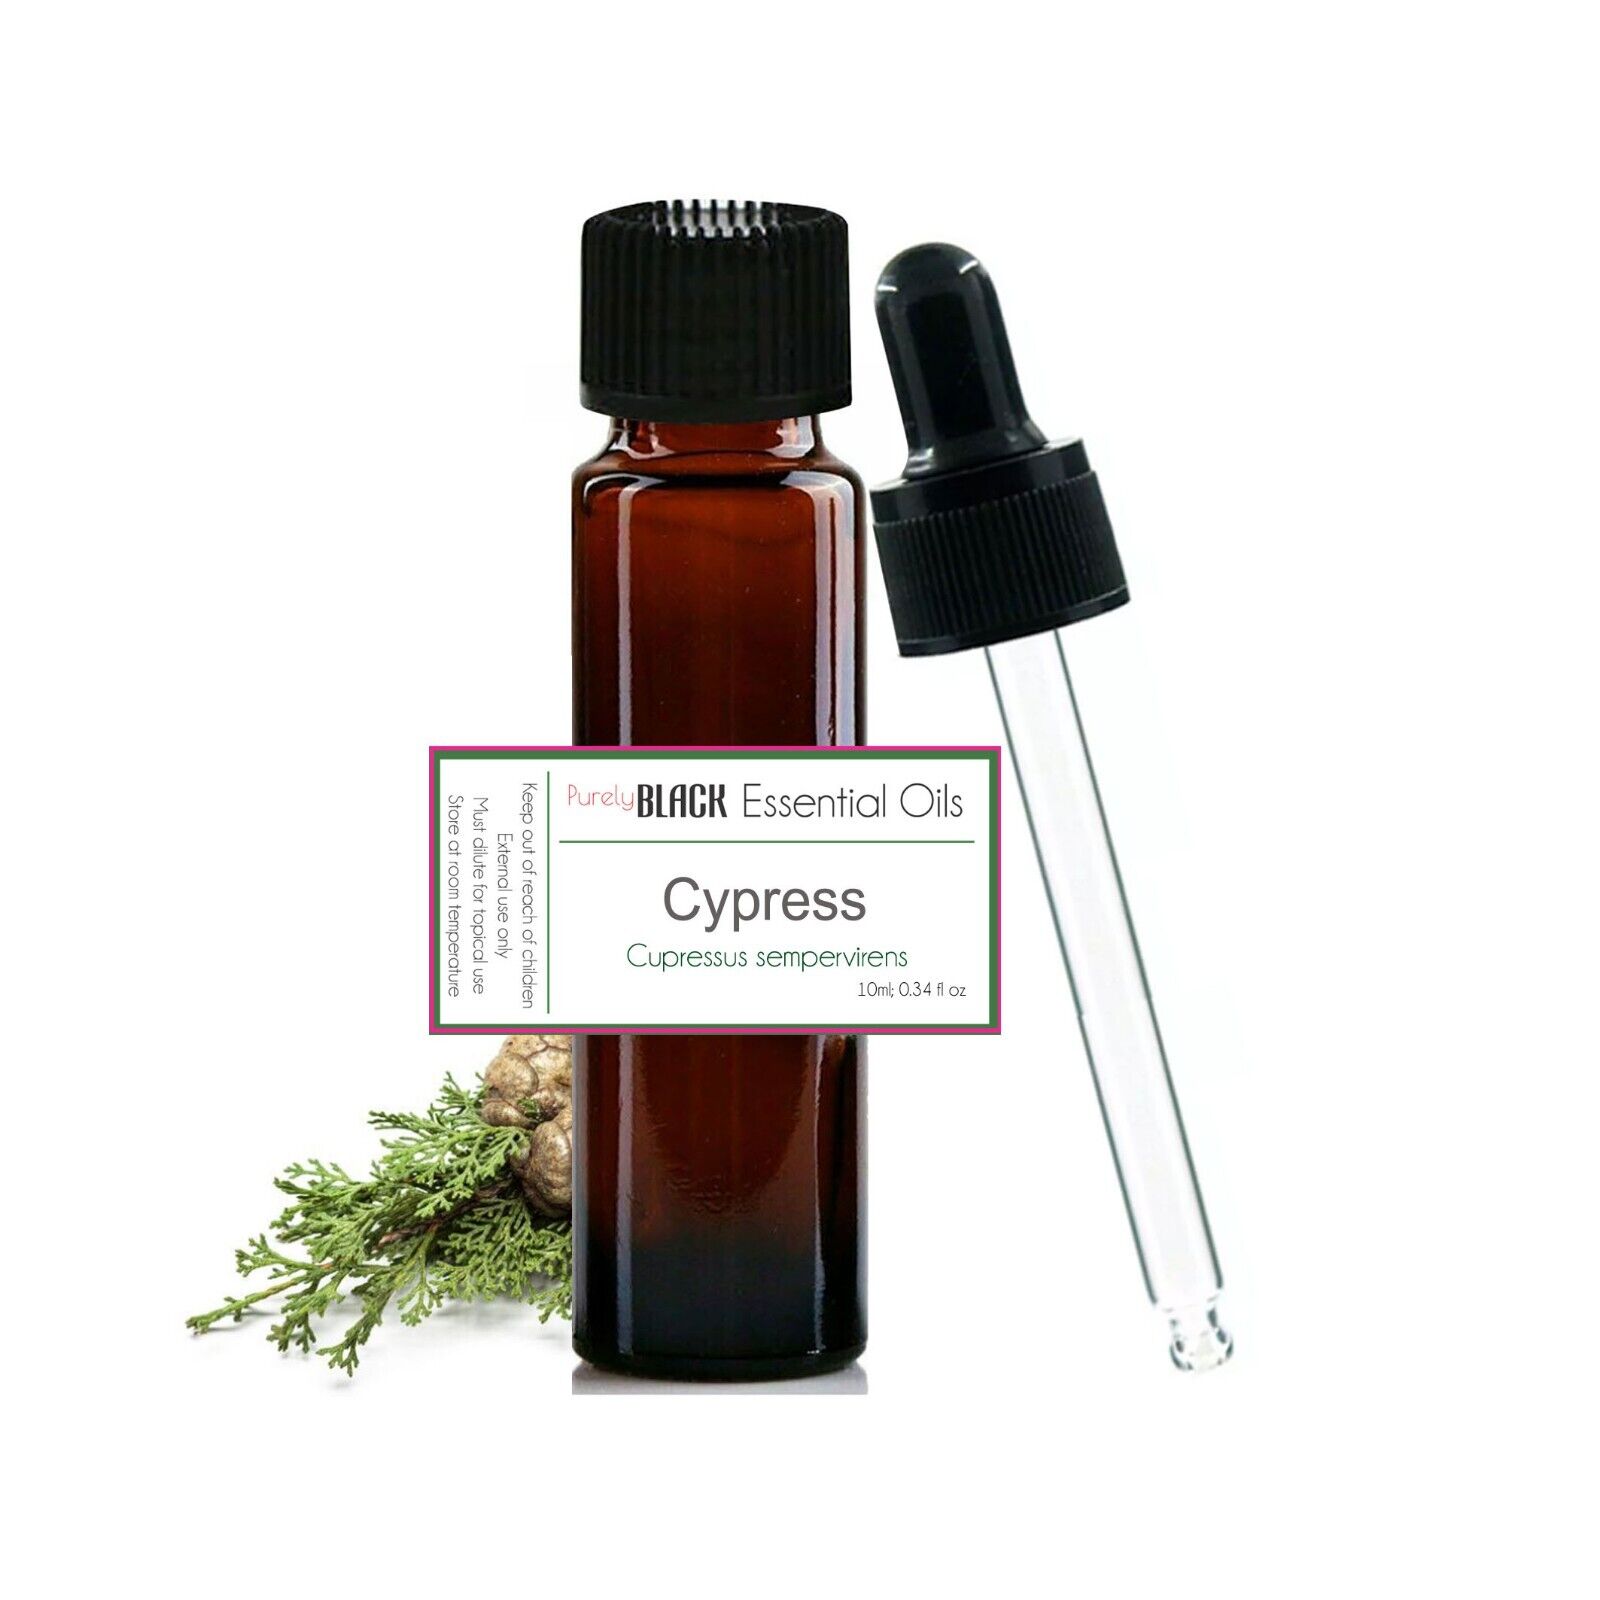 Pure Cypress Essential Oil [ Cupressus sempervirens ] 10 ml. Aroamtherapy Skincare Diffuser Oils